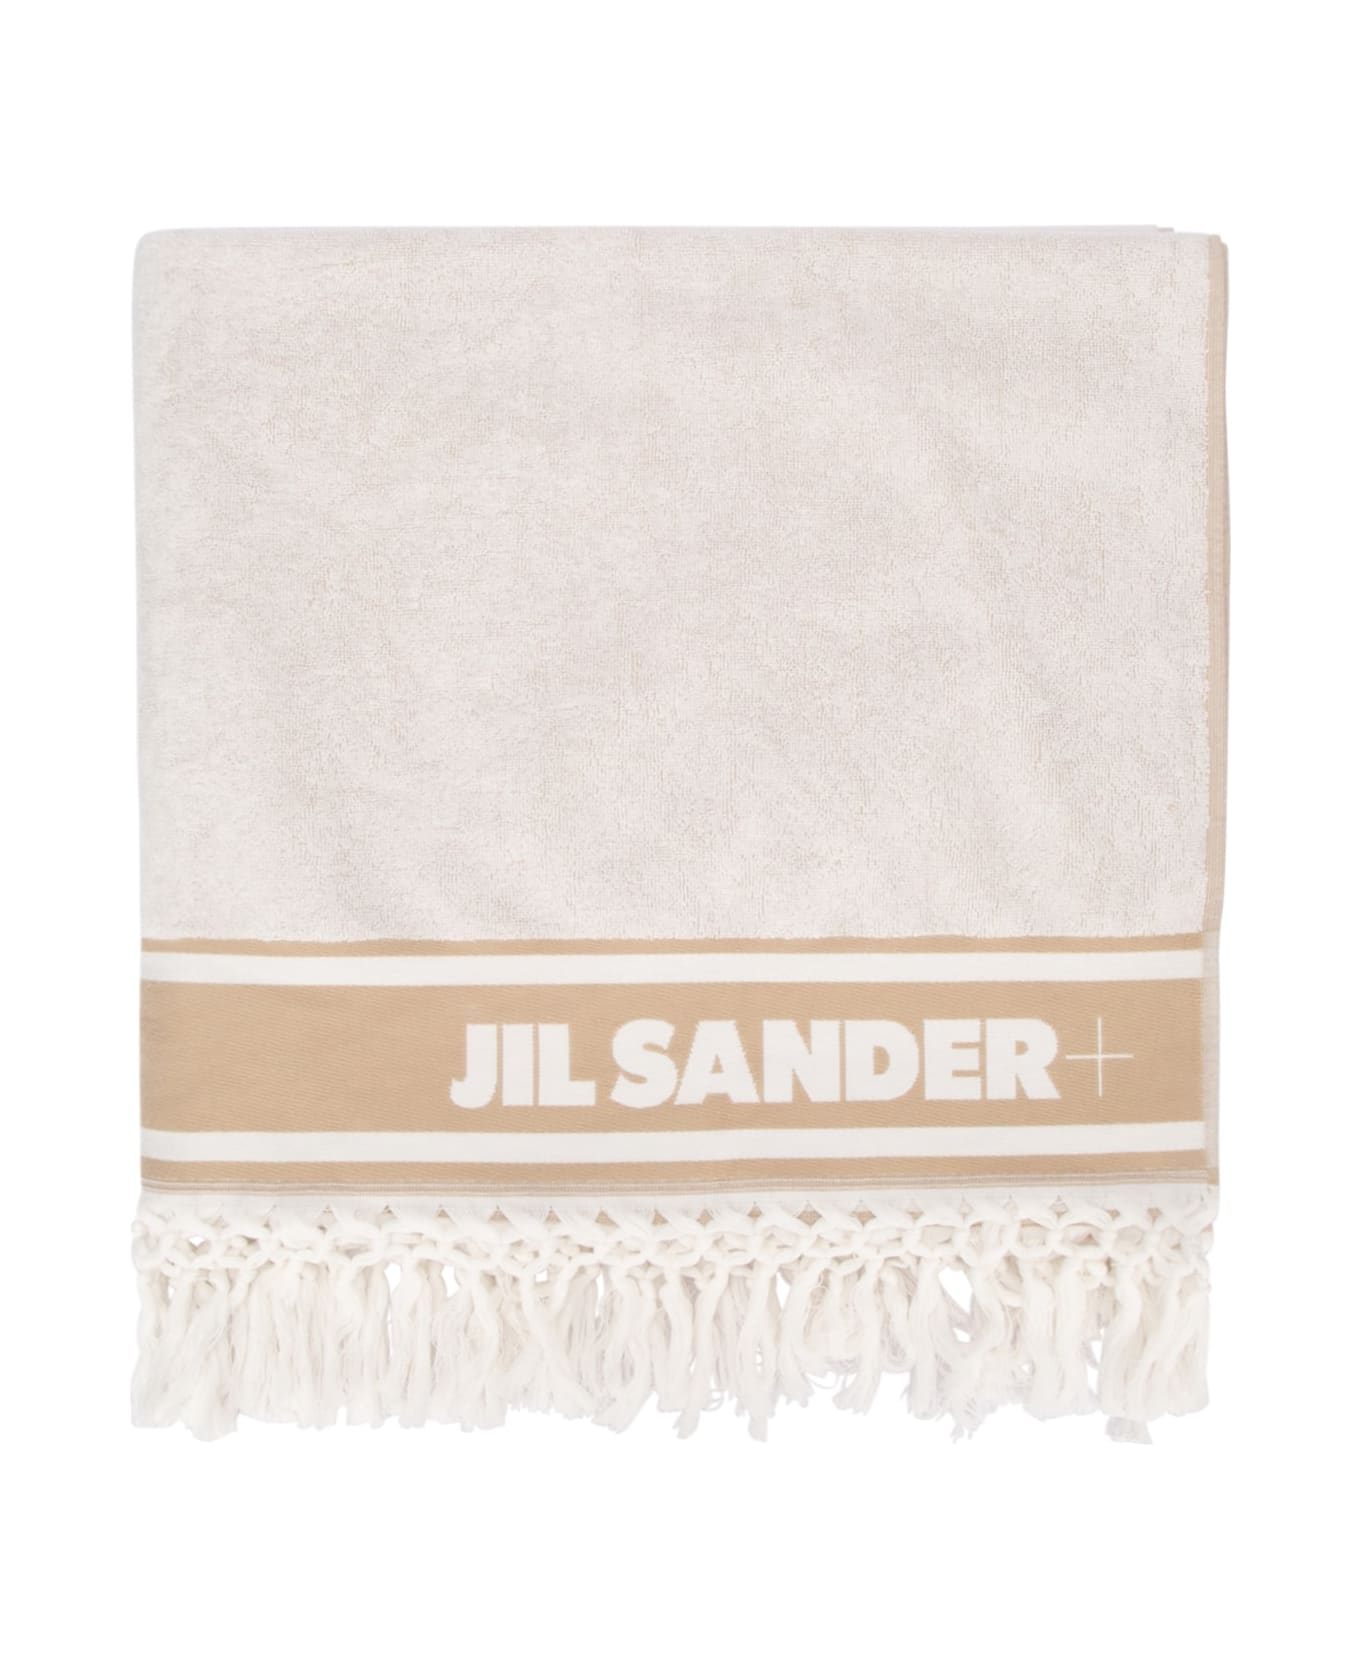 Jil Sander Embroidered Cotton Beach Towel - 290 タオル